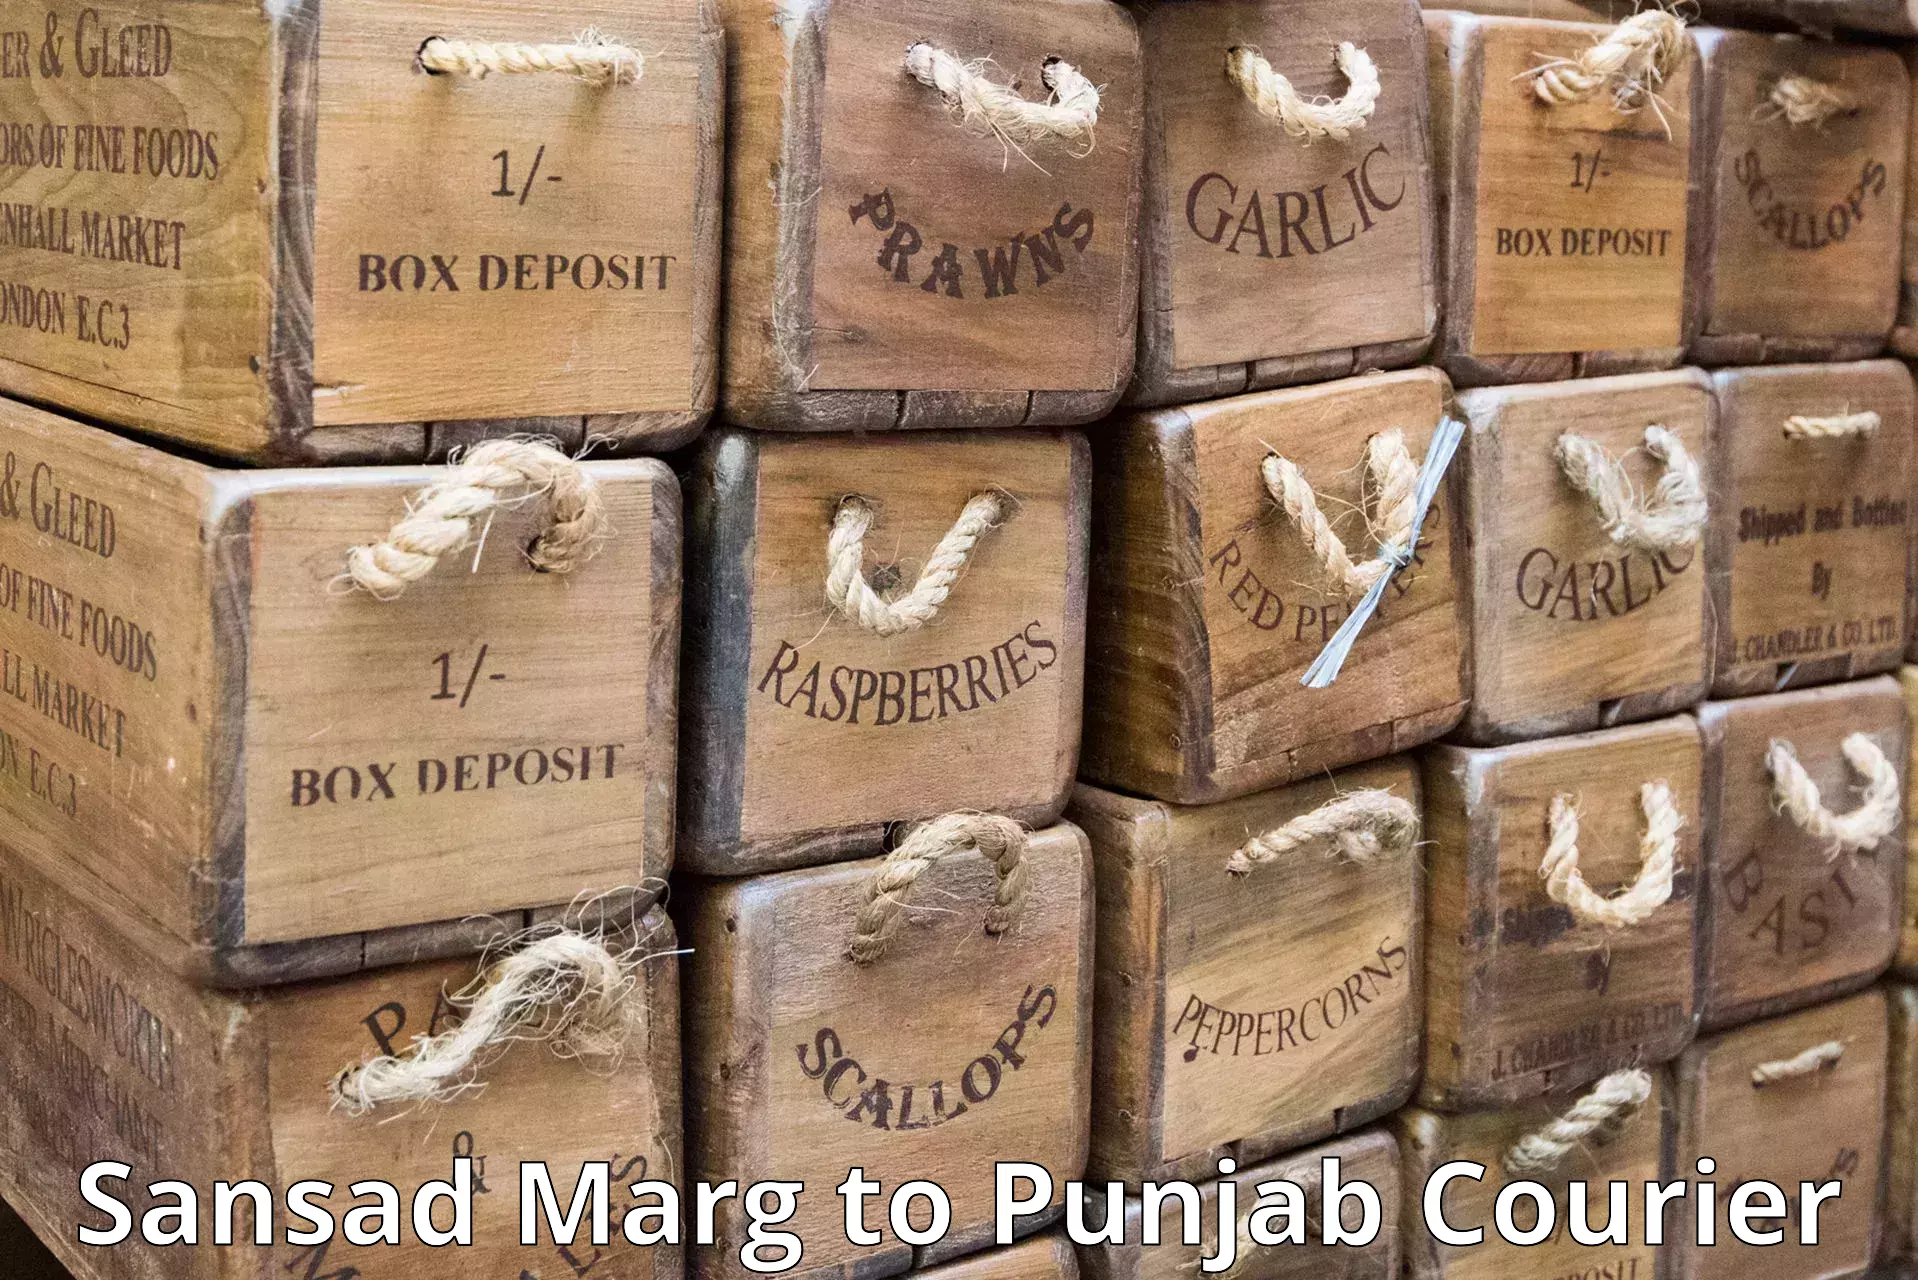 Courier service partnerships Sansad Marg to Raikot